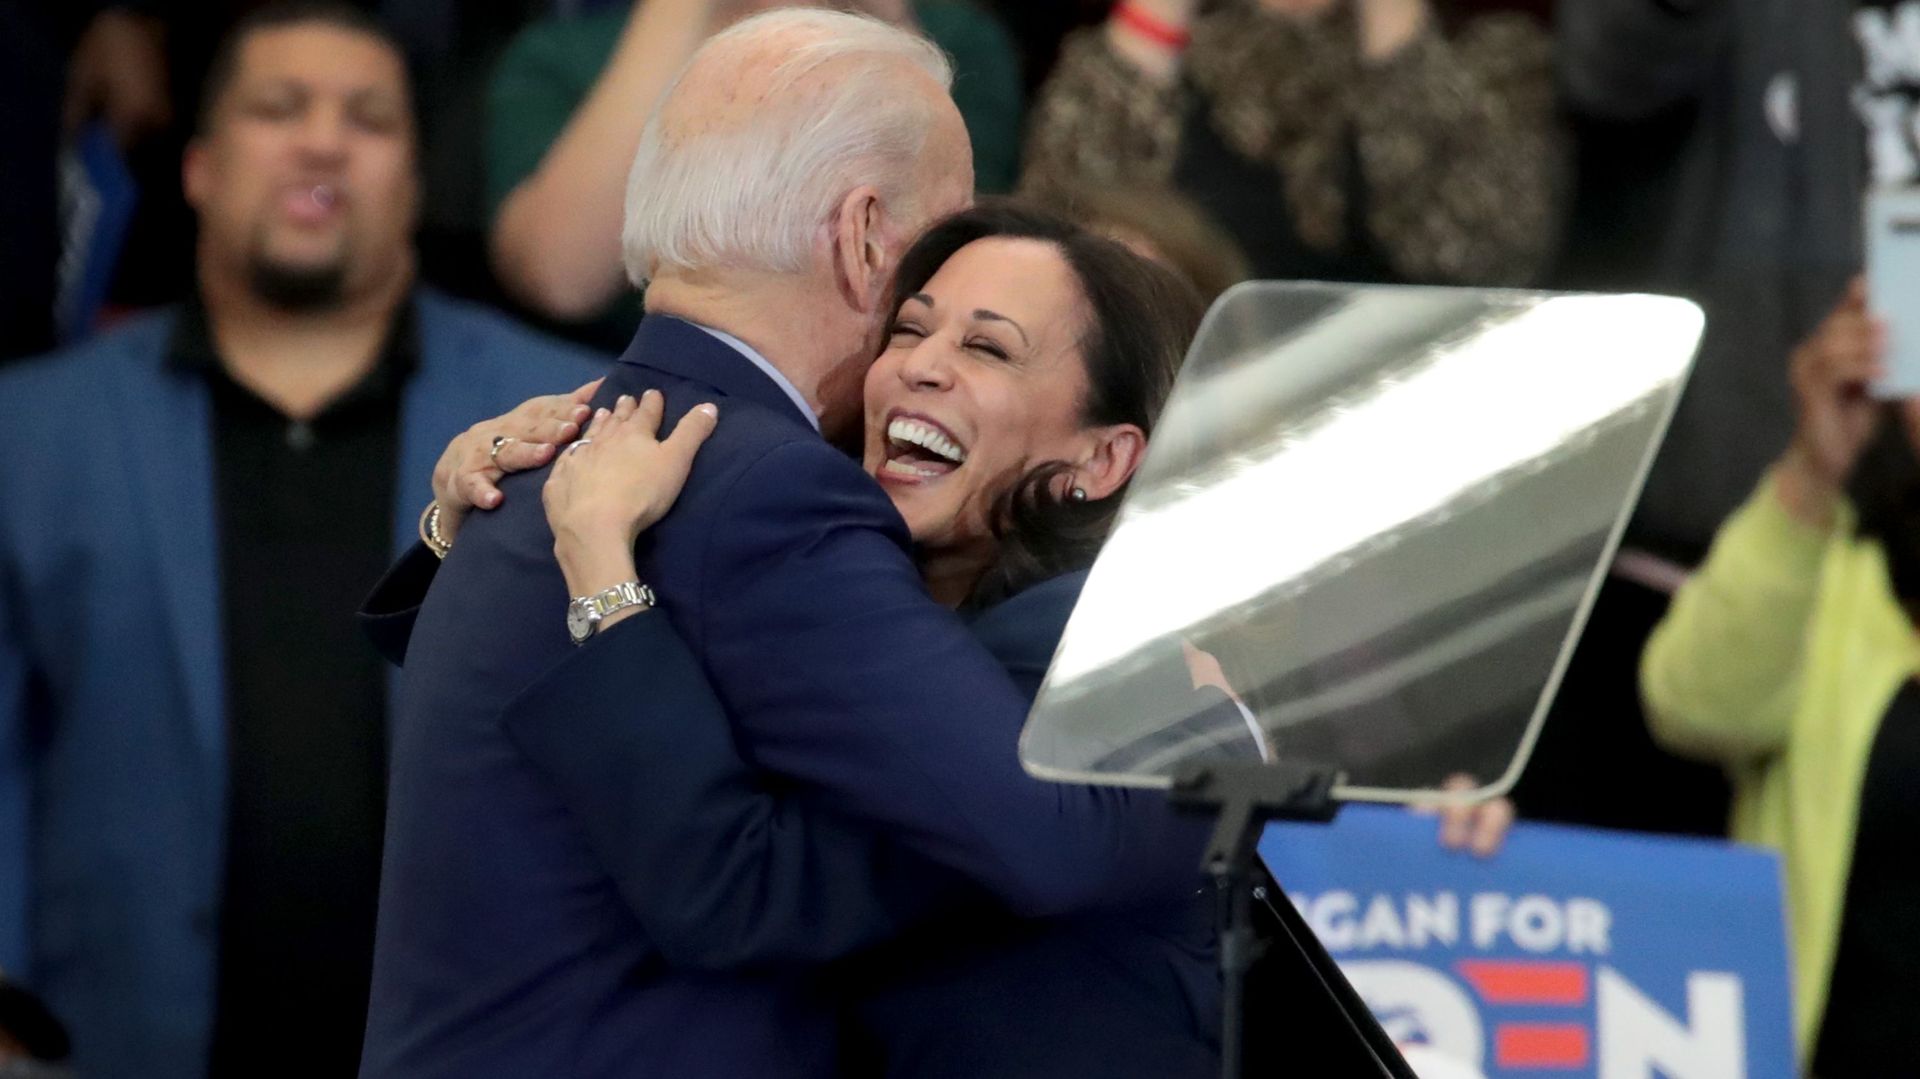  Joe Biden et Kamala Harris, une complicité évidente.